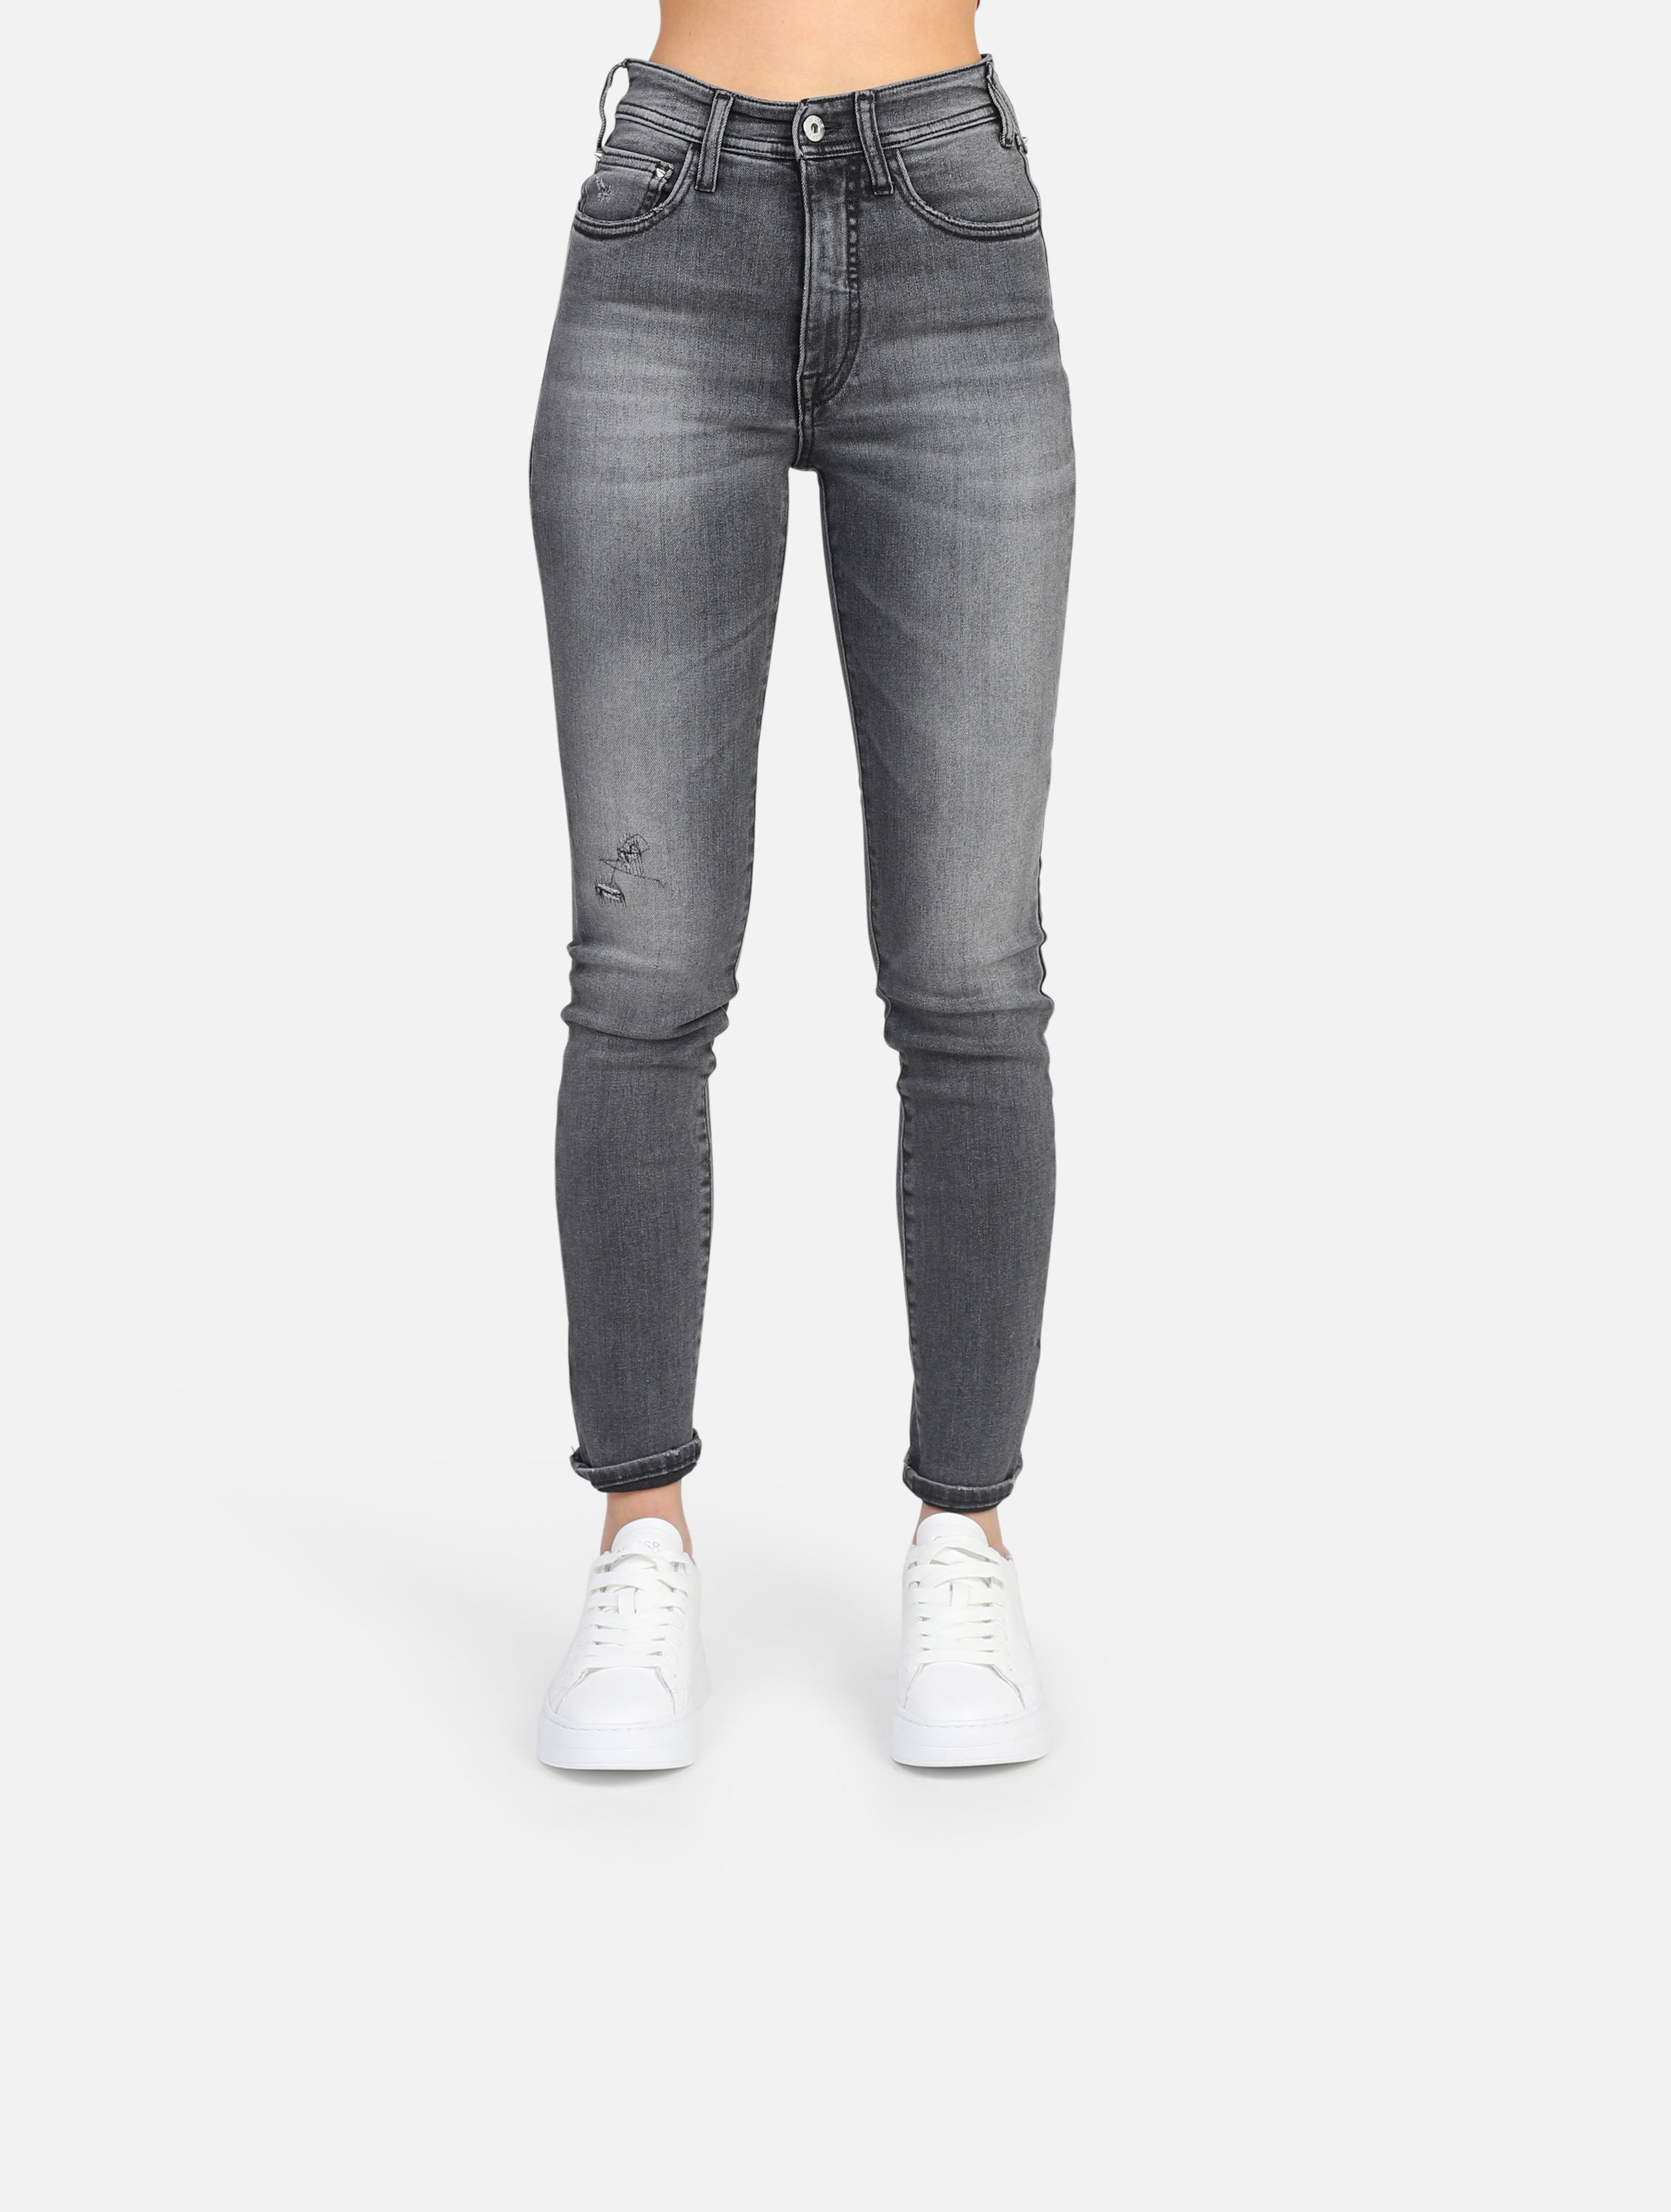 Jeans cycle  -  grigio scuro donna  - 1